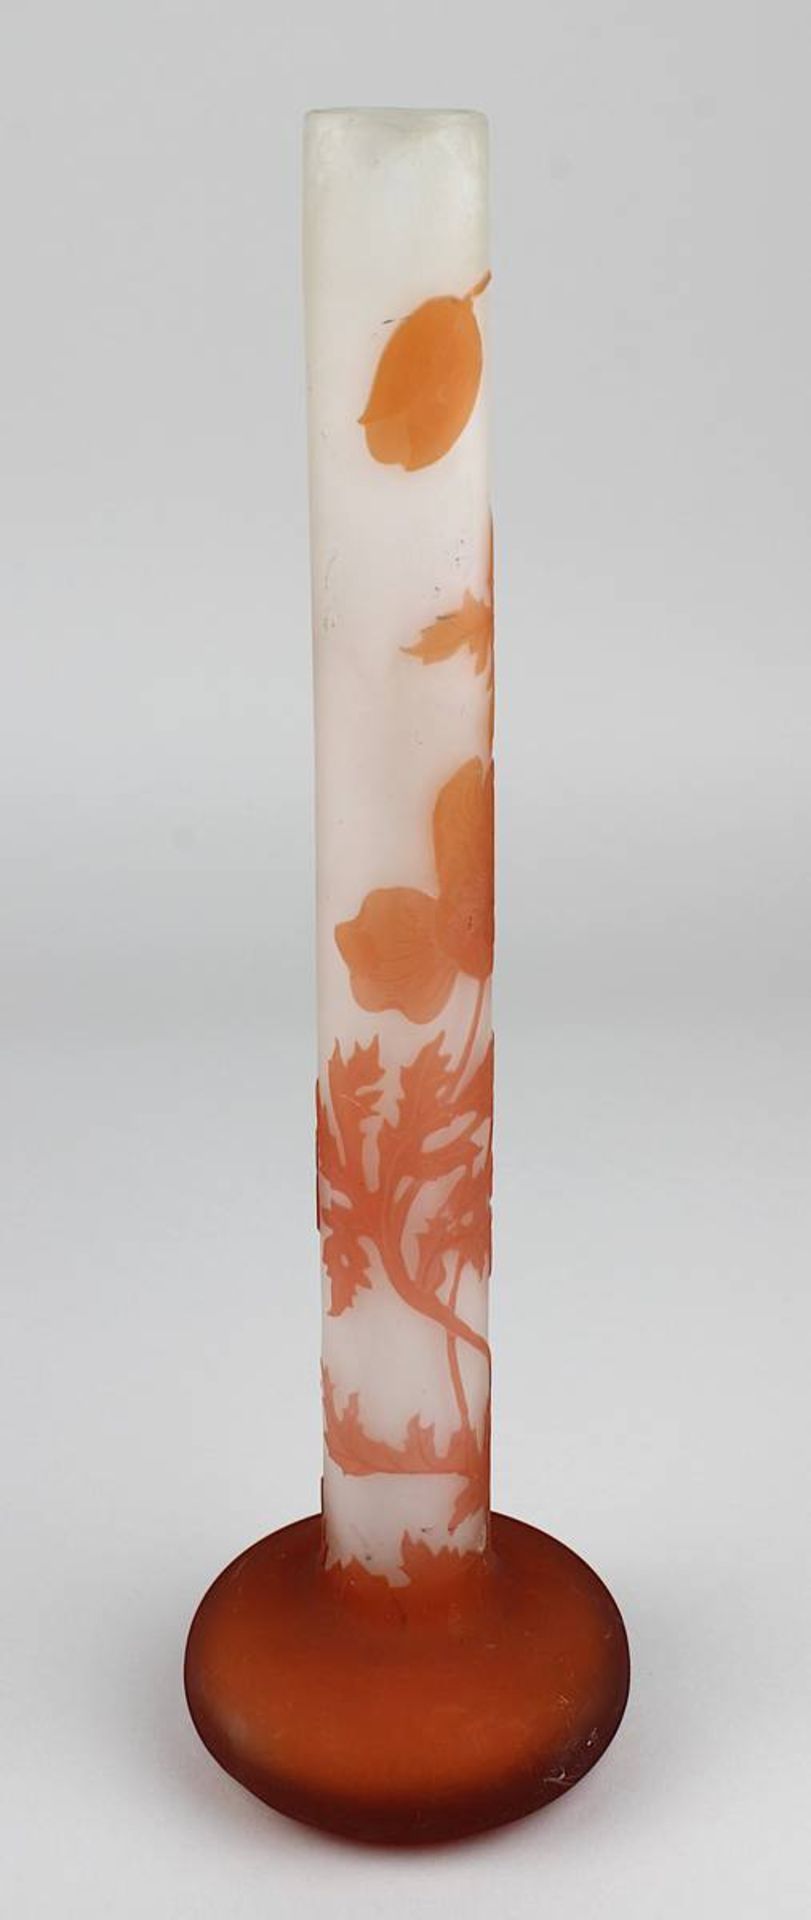 Jugendstil Gallé Stangen-Vase mit Mohndekor, Nancy 1906 - 1914, matt geätzter Klarglaskorpus, im - Image 4 of 4